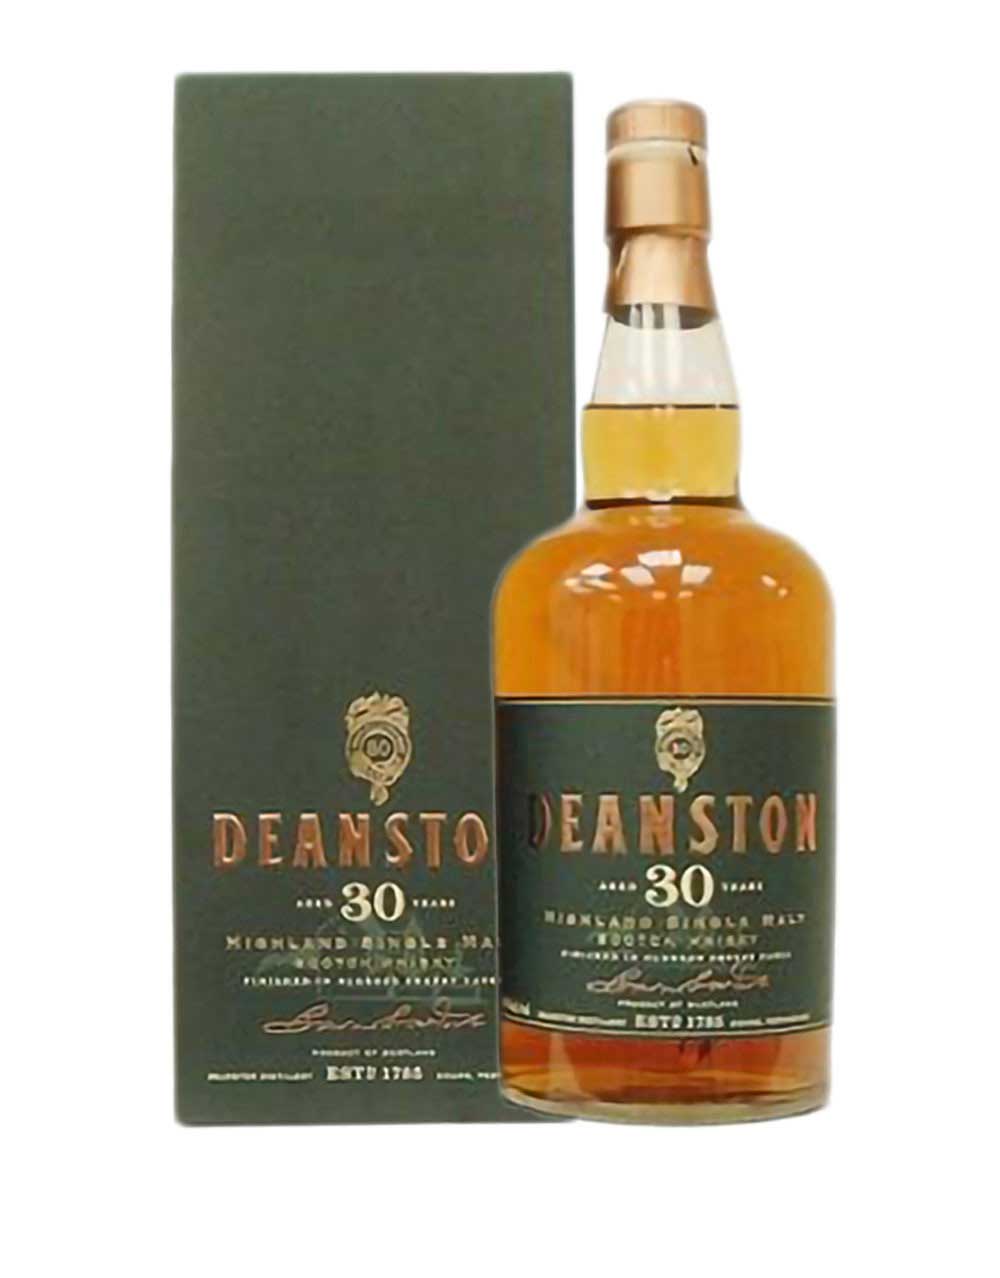 Deanston 30 Year Old Single Malt Scotch Whisky